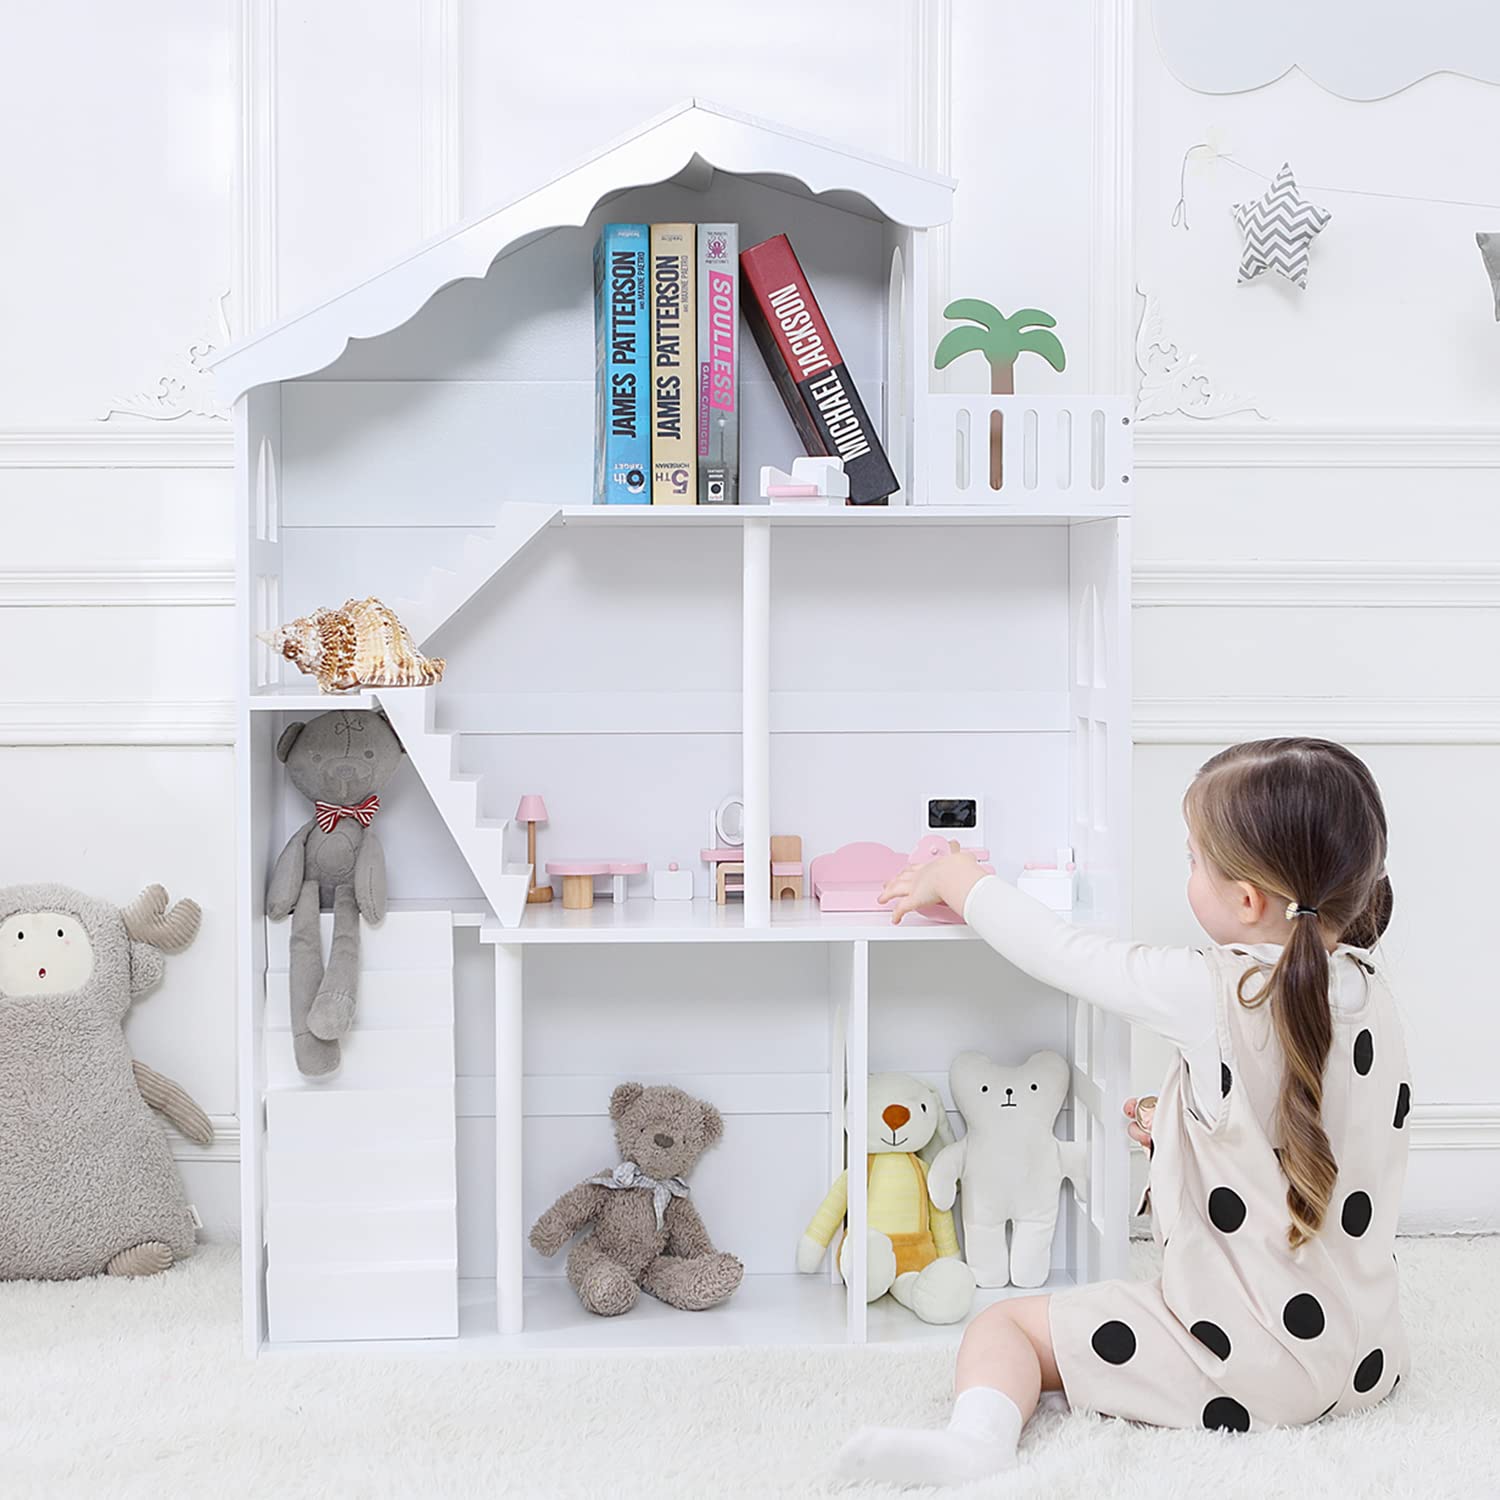 YFDZONE Dollhouse Bookshelf, Wooden Kids Bookshelve Children Doll House Toy Storage 3-Tier Kids Bookcase for Books Doll Toy Gift for Girls Ages 3-7+